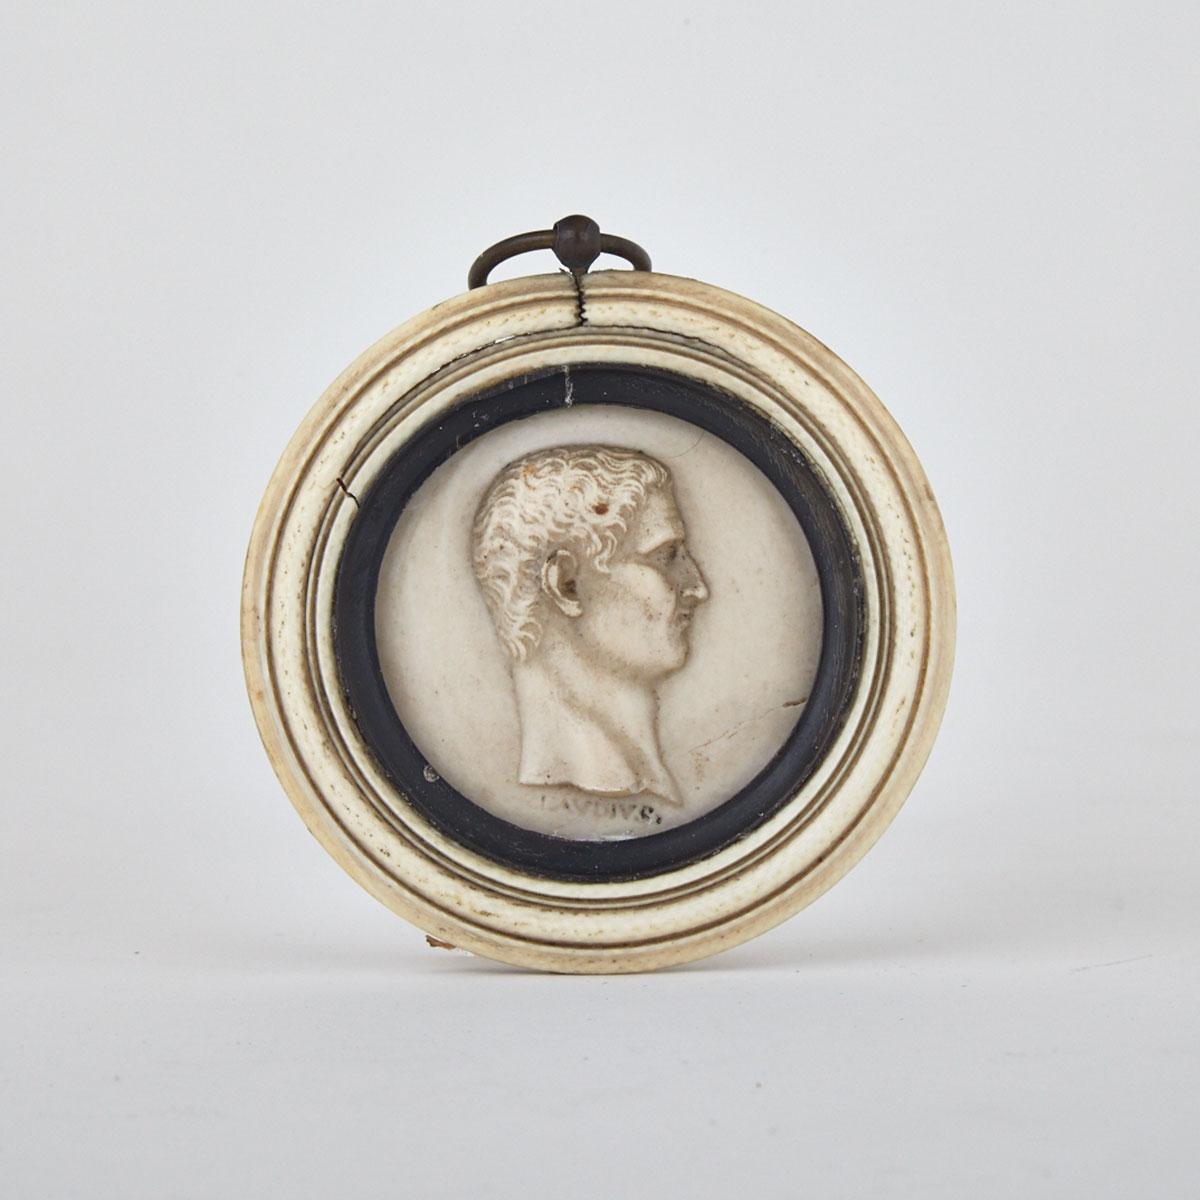 Italian Grand Tour Miniature Relief Portrait of Emperor Claudius, early 19th century